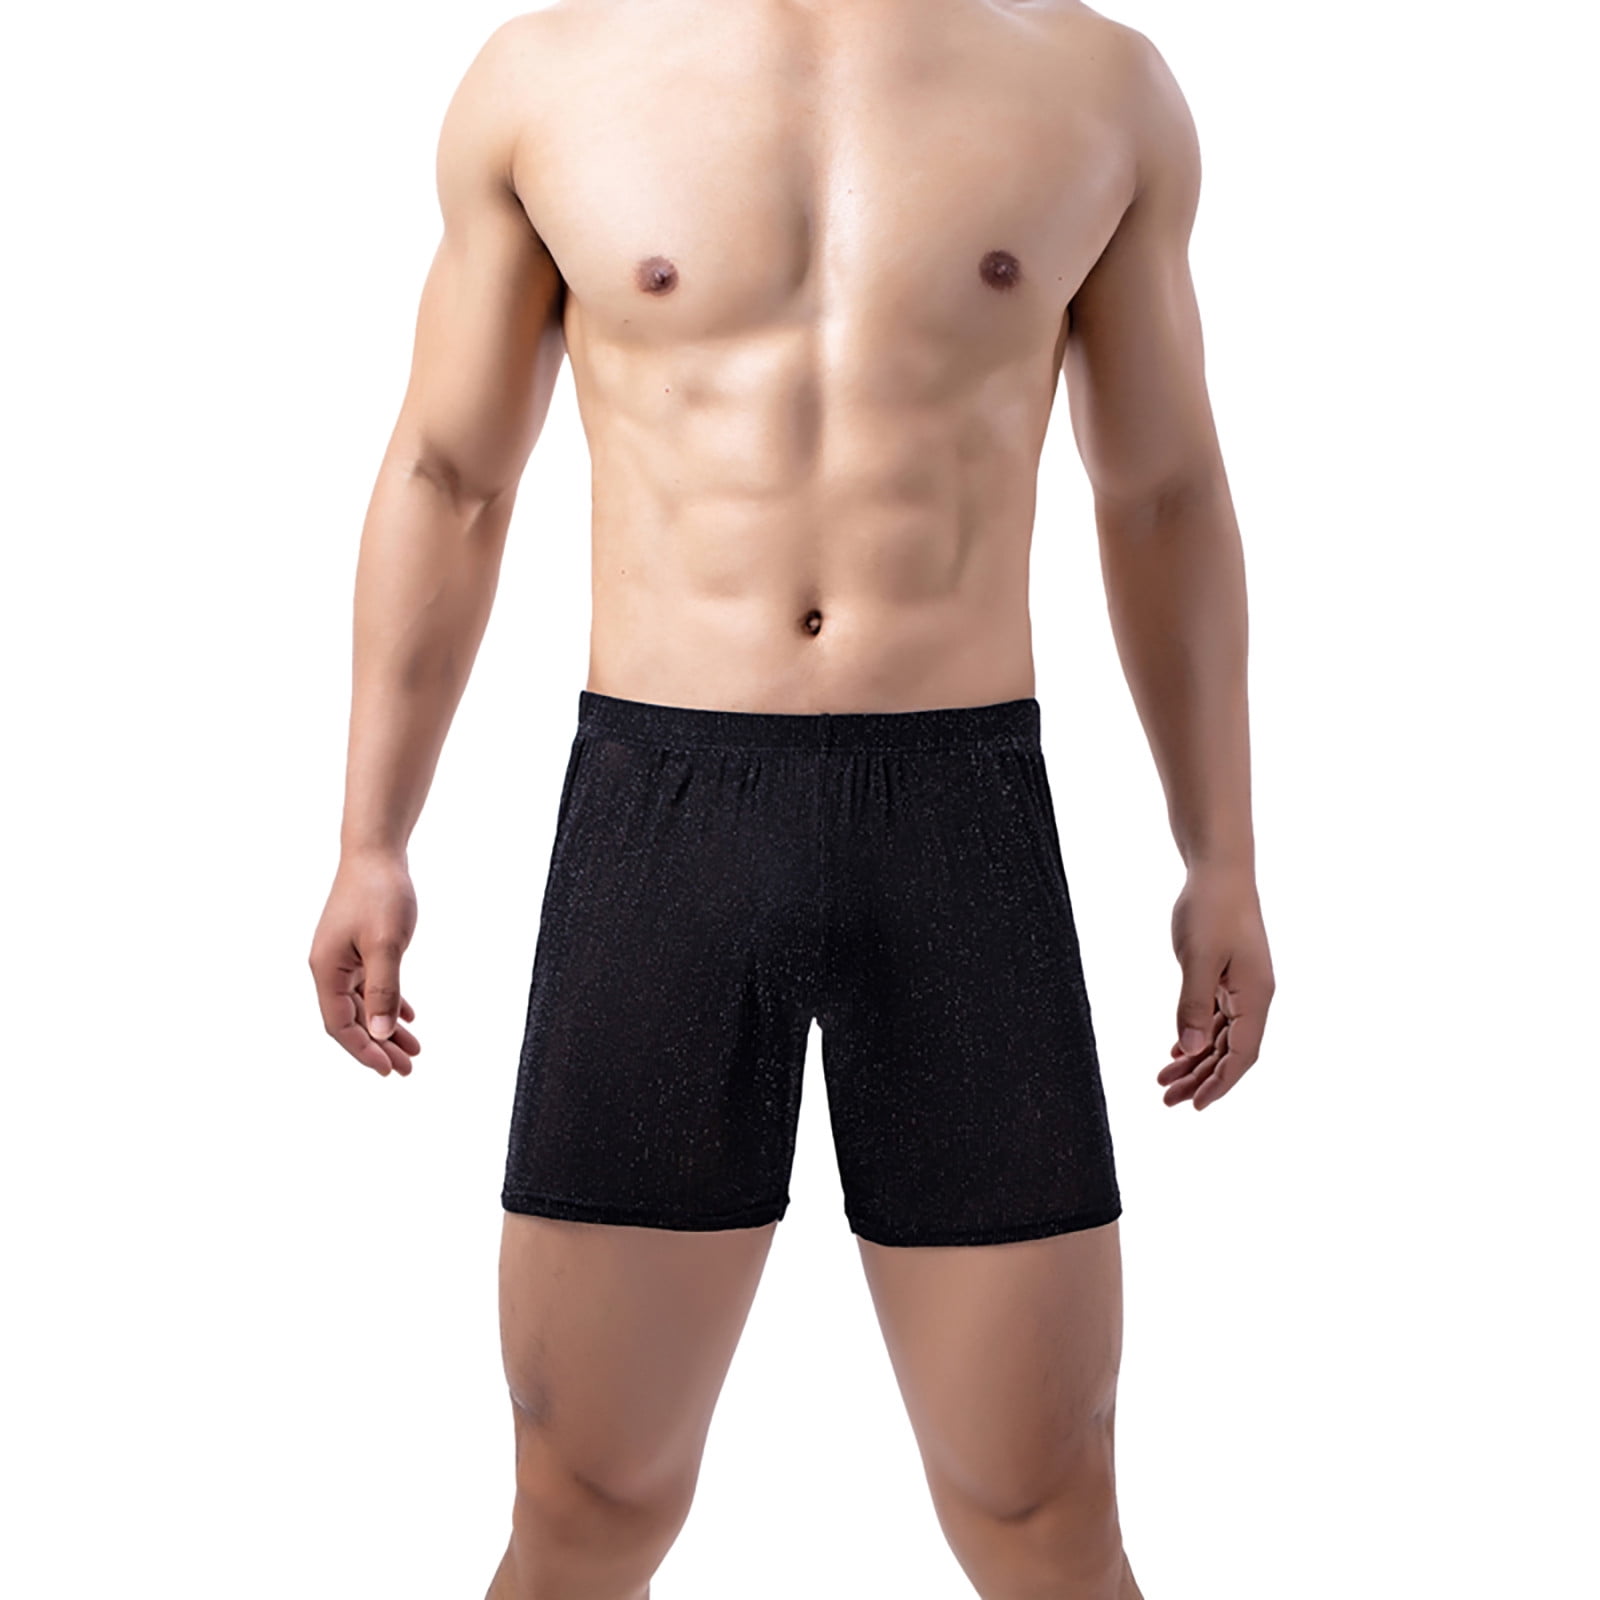 8QIDA Male Fashion Underpants Sexy Knickers Ride up Briefs Underwear ...